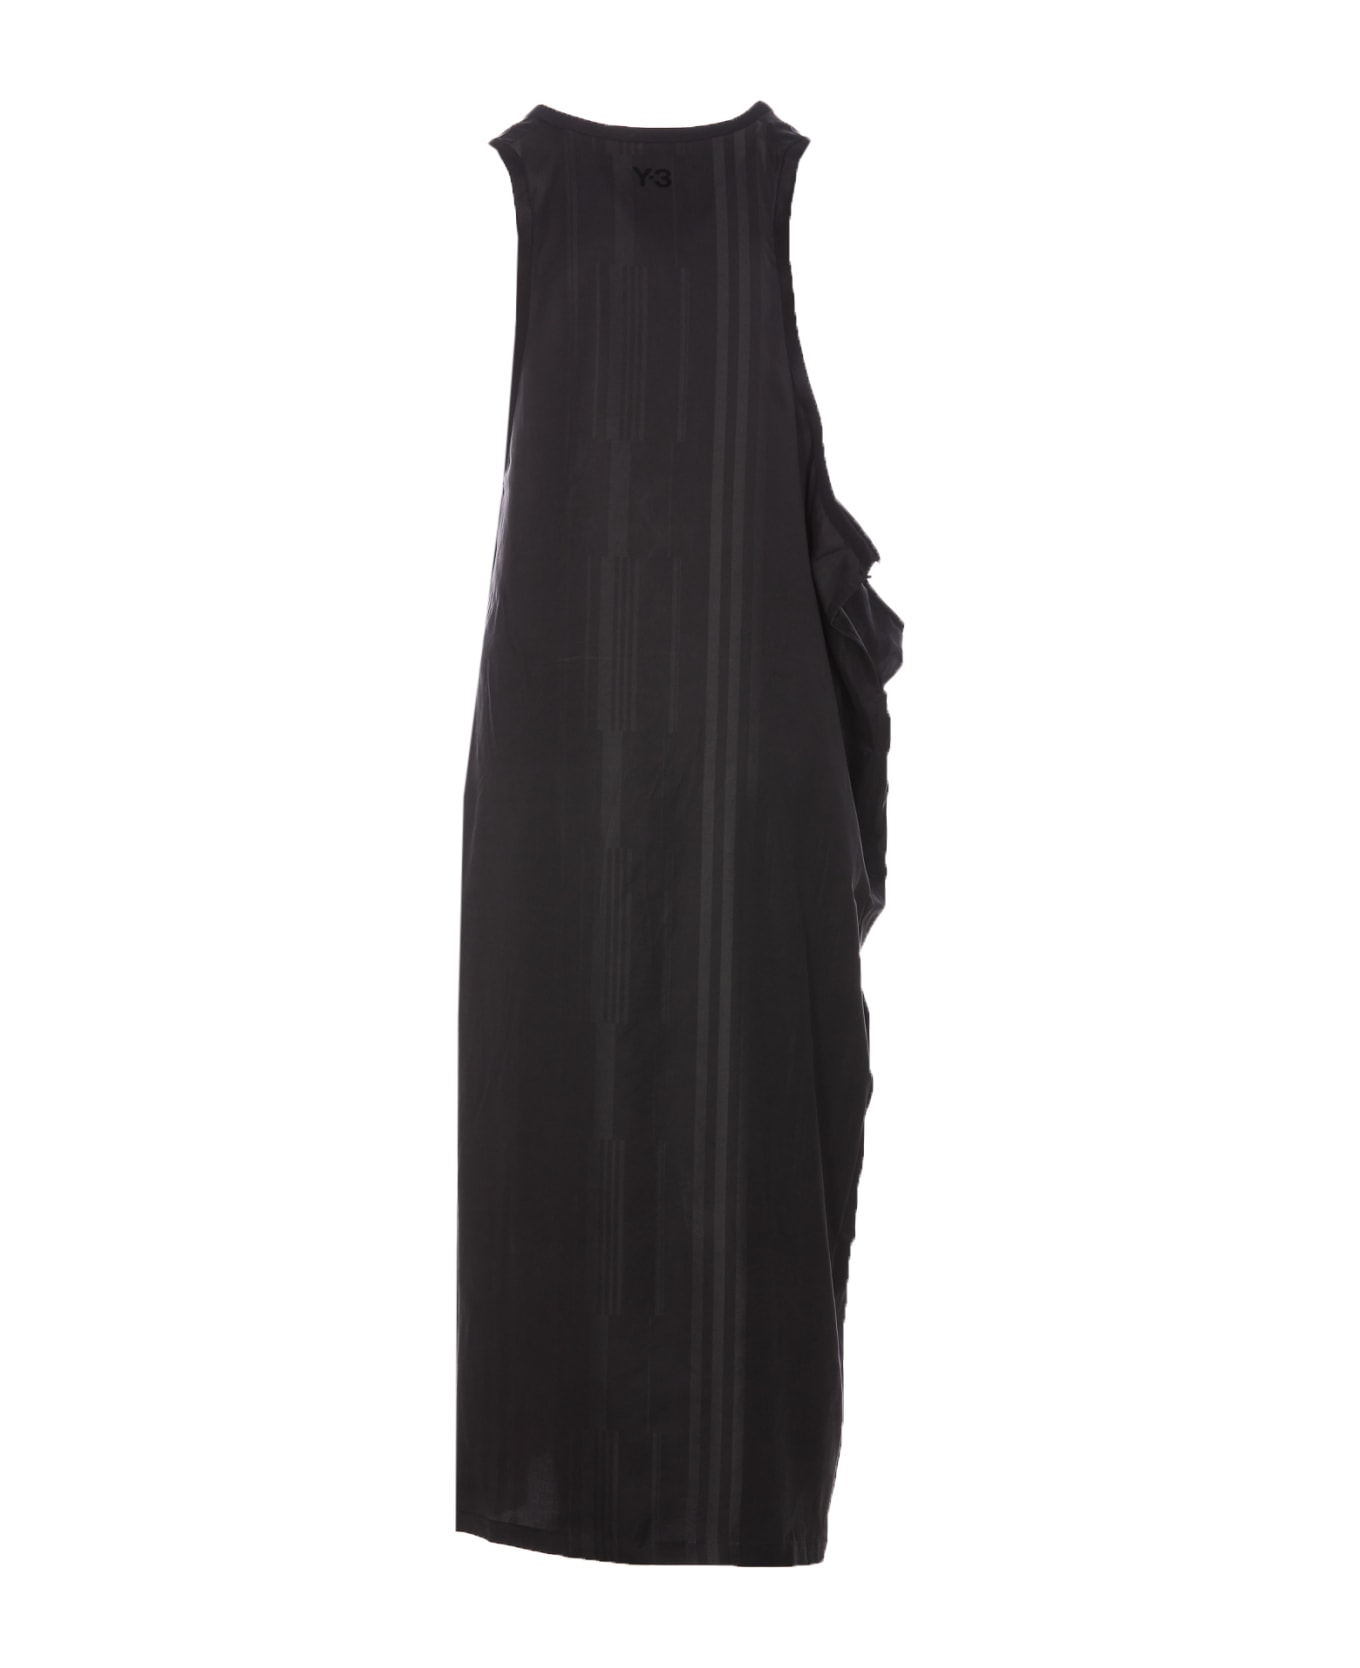 Y-3 3s Dress - Black ウェア